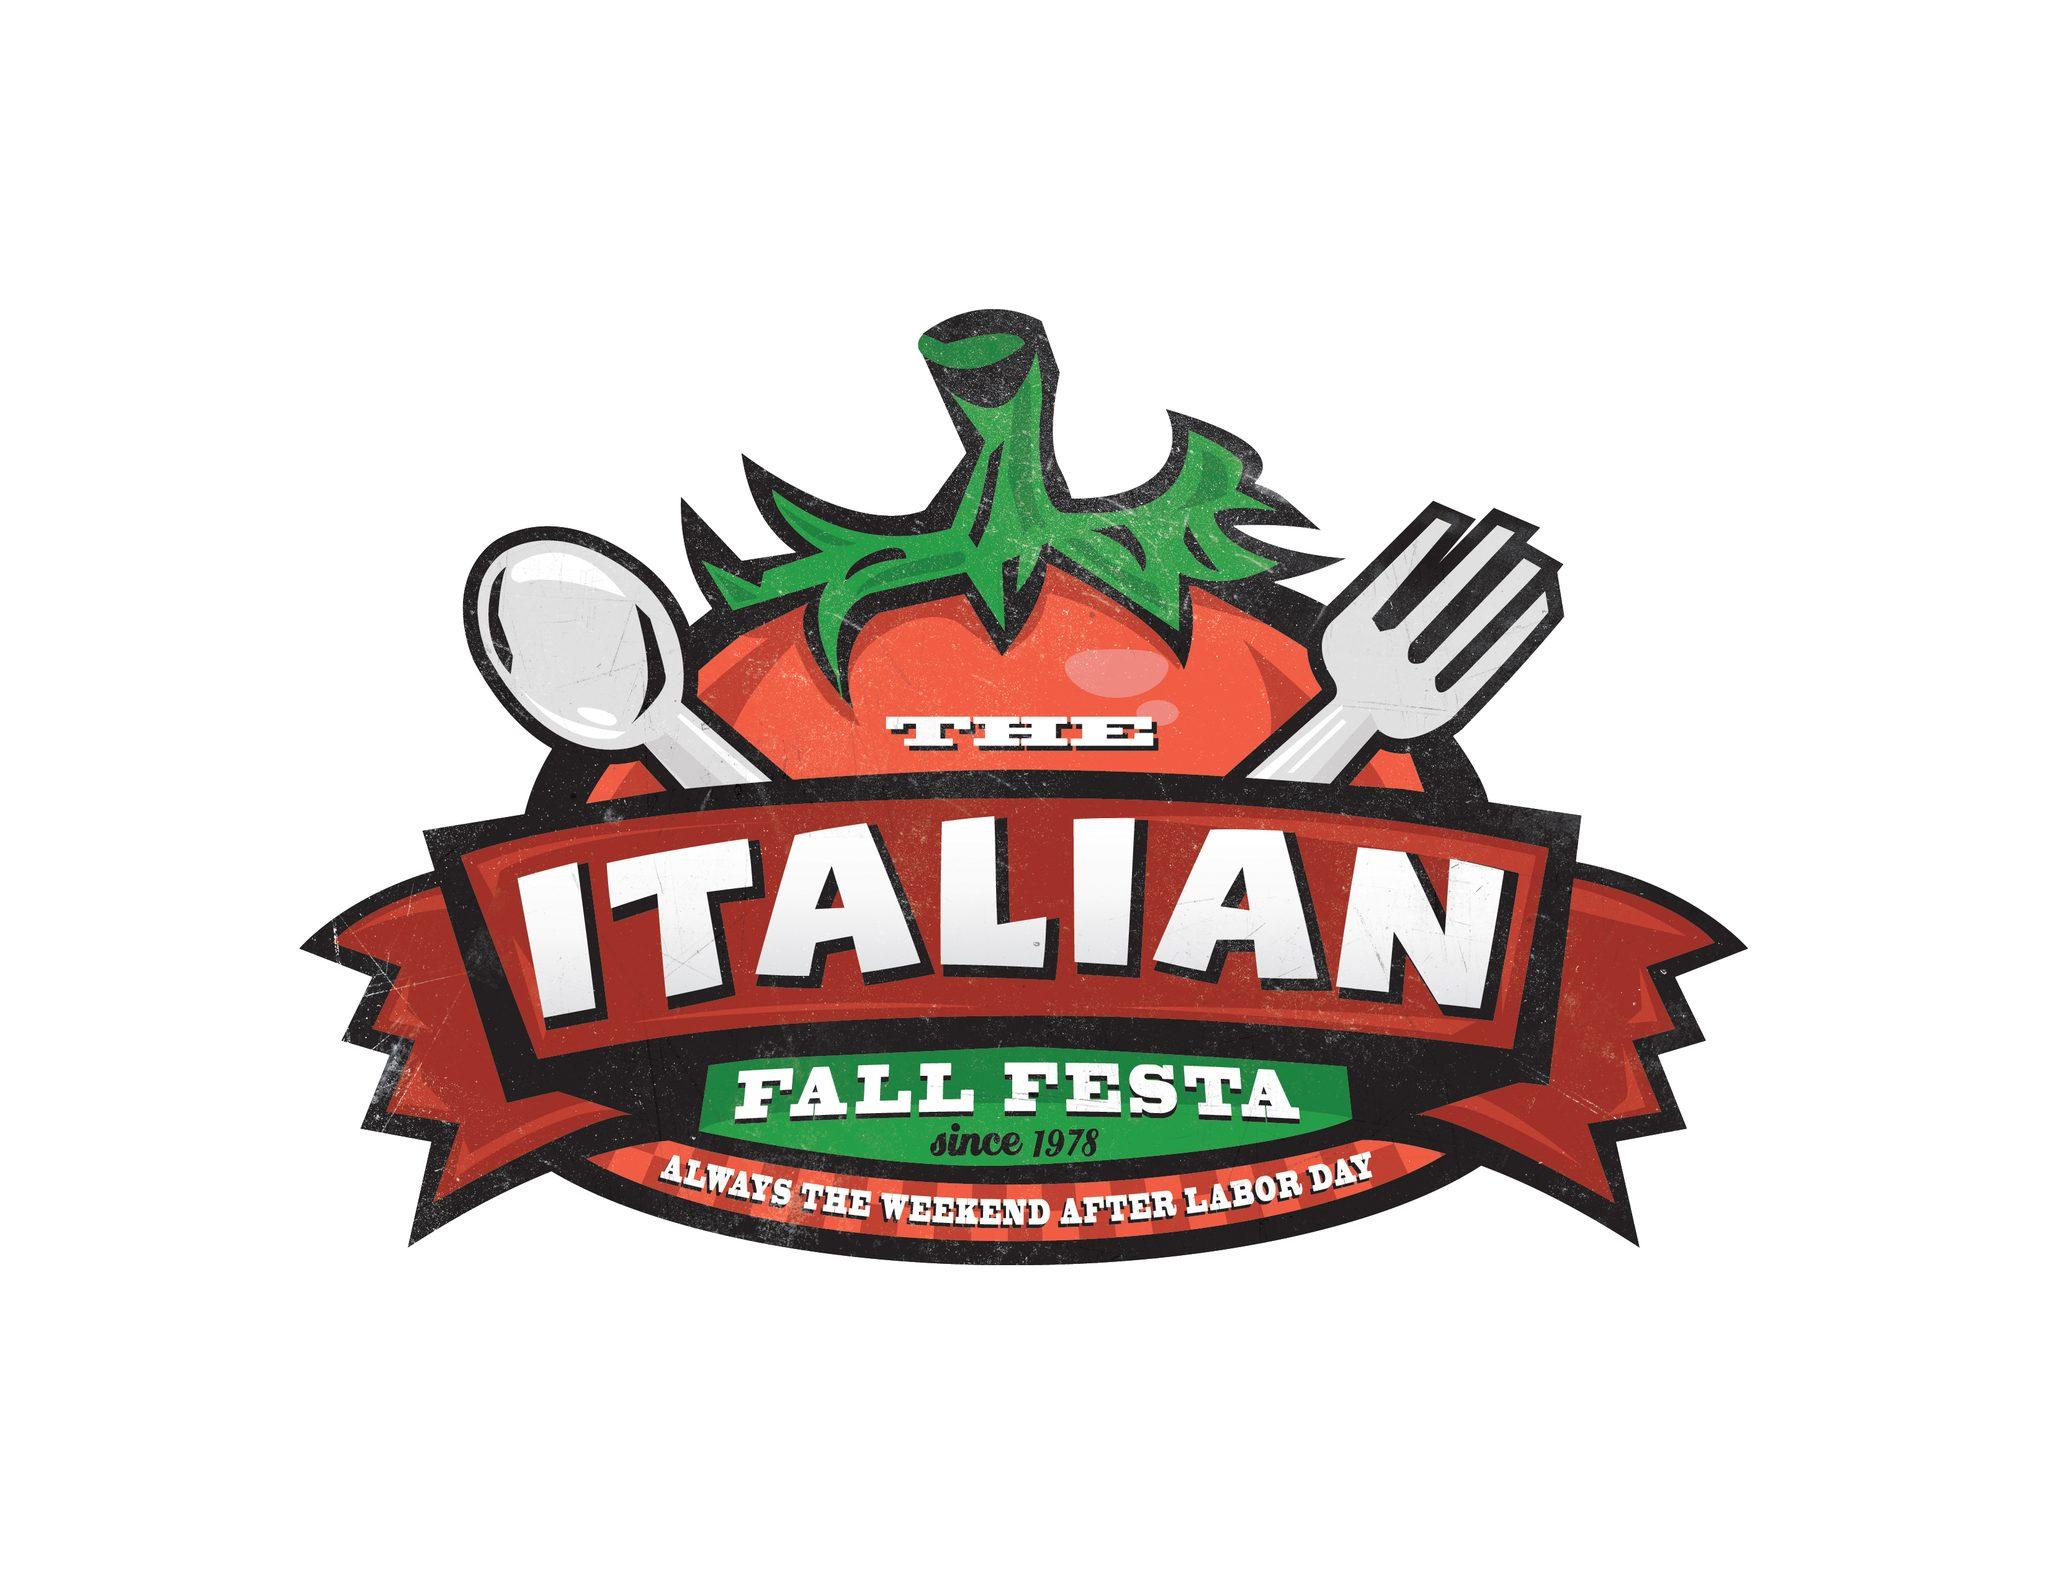 The 45th Annual Italian Fall Festa